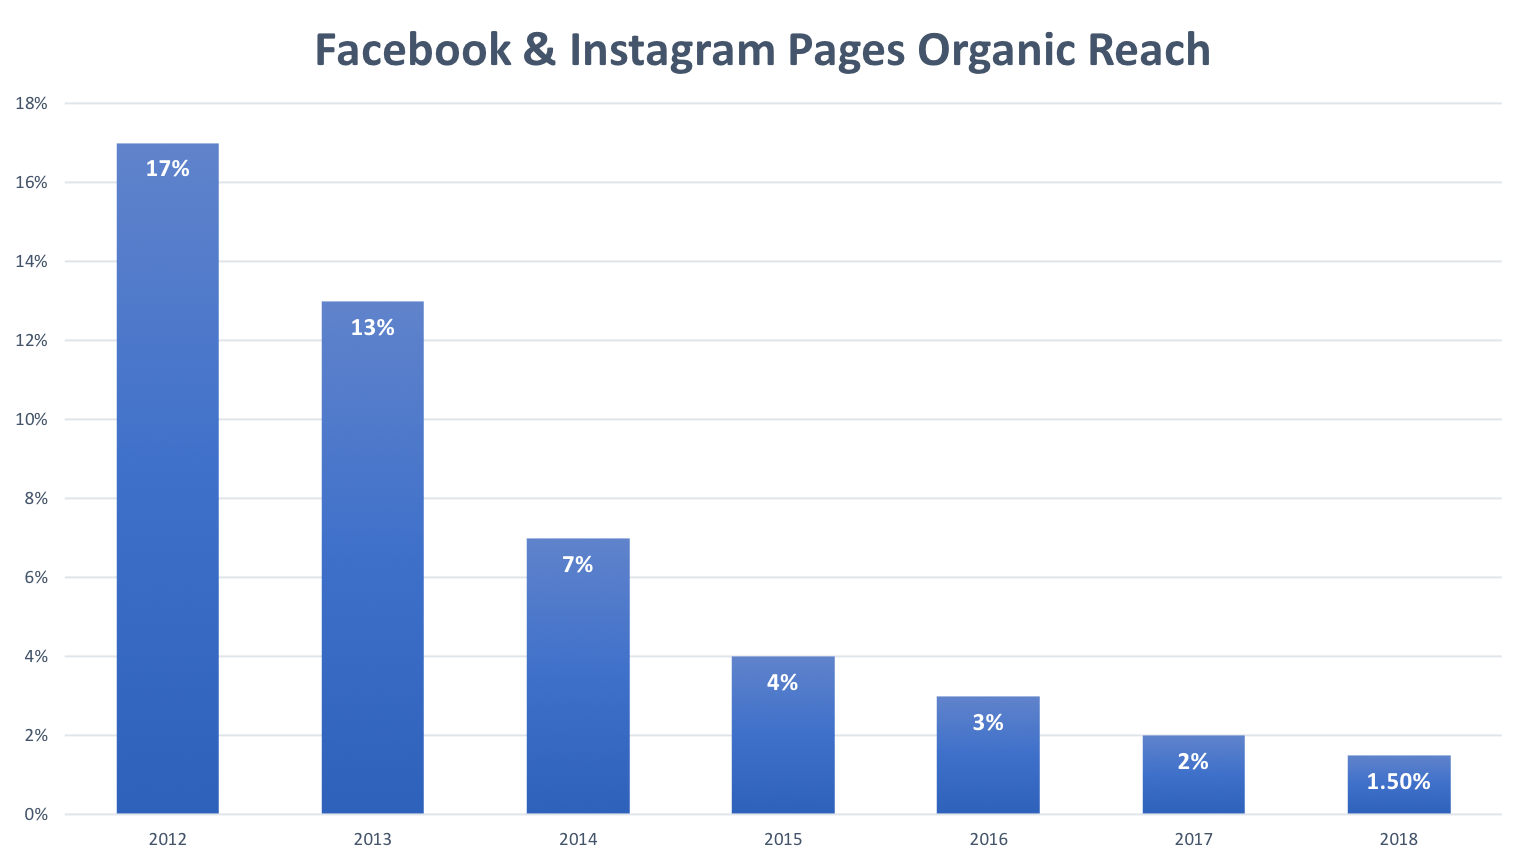 facebook-organic-reach